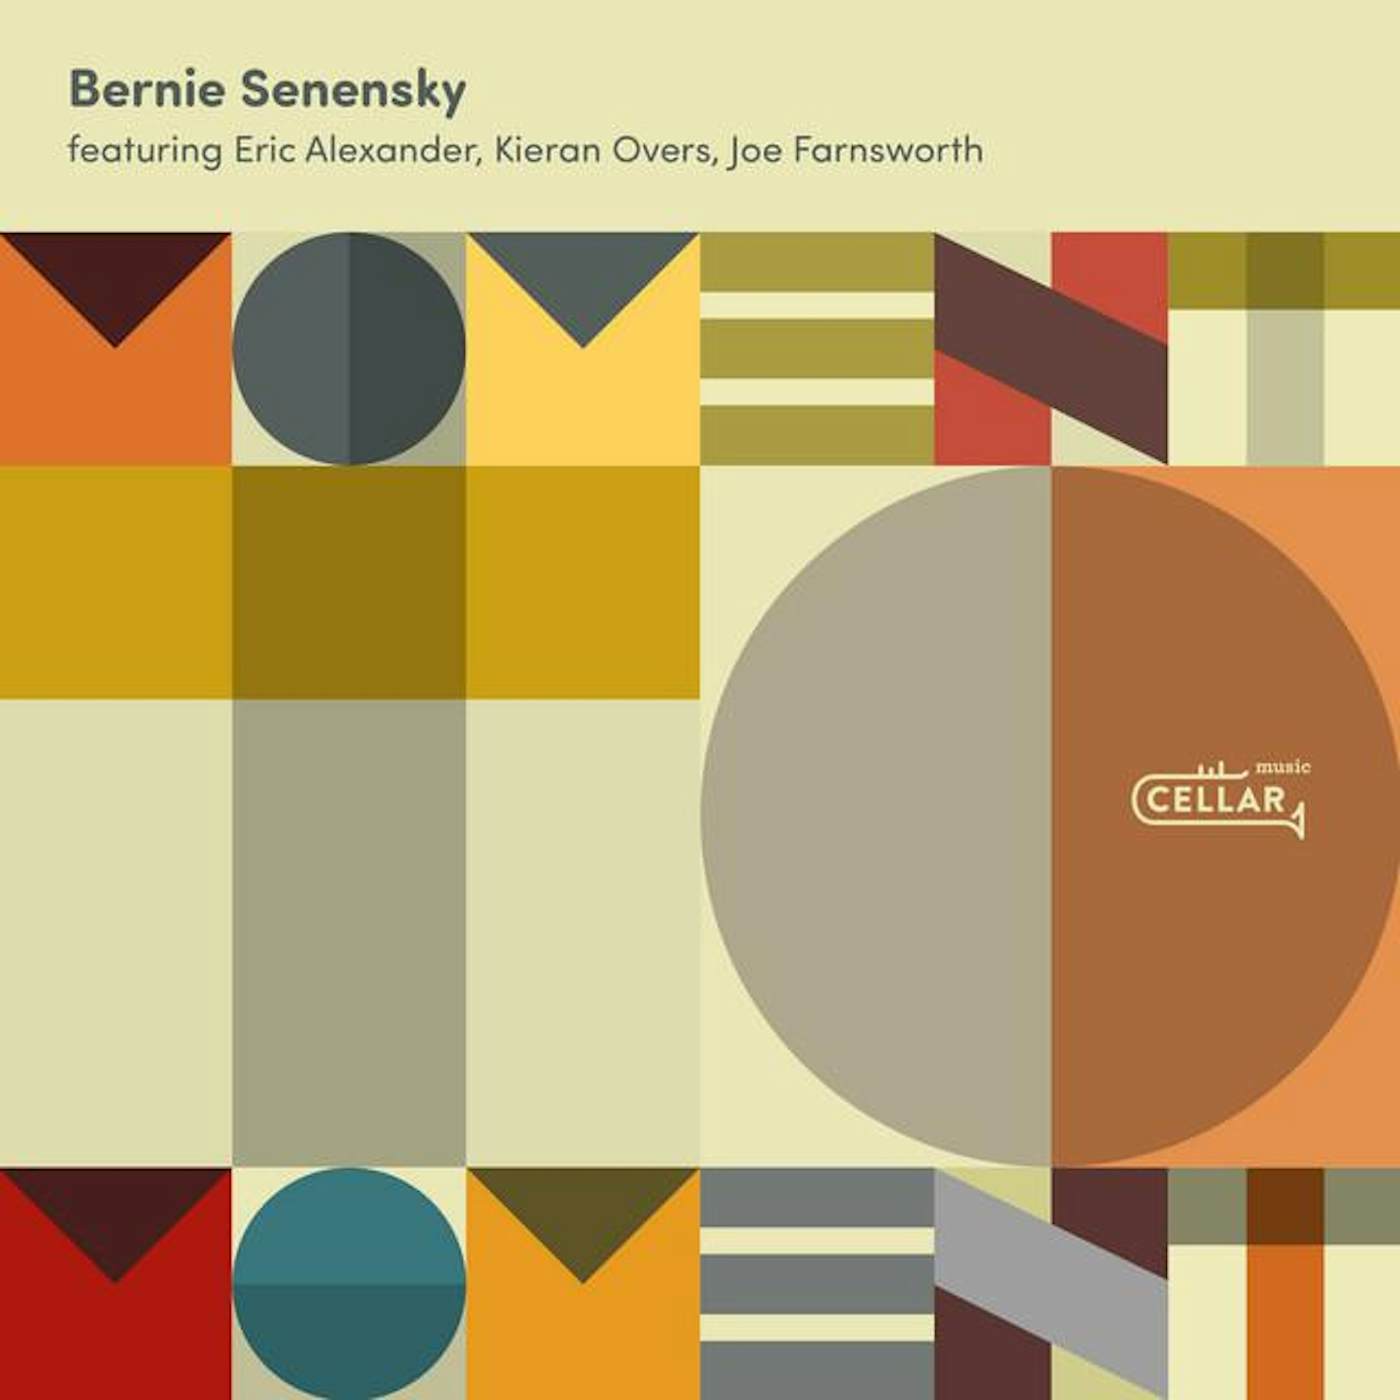 Bernie Senensky